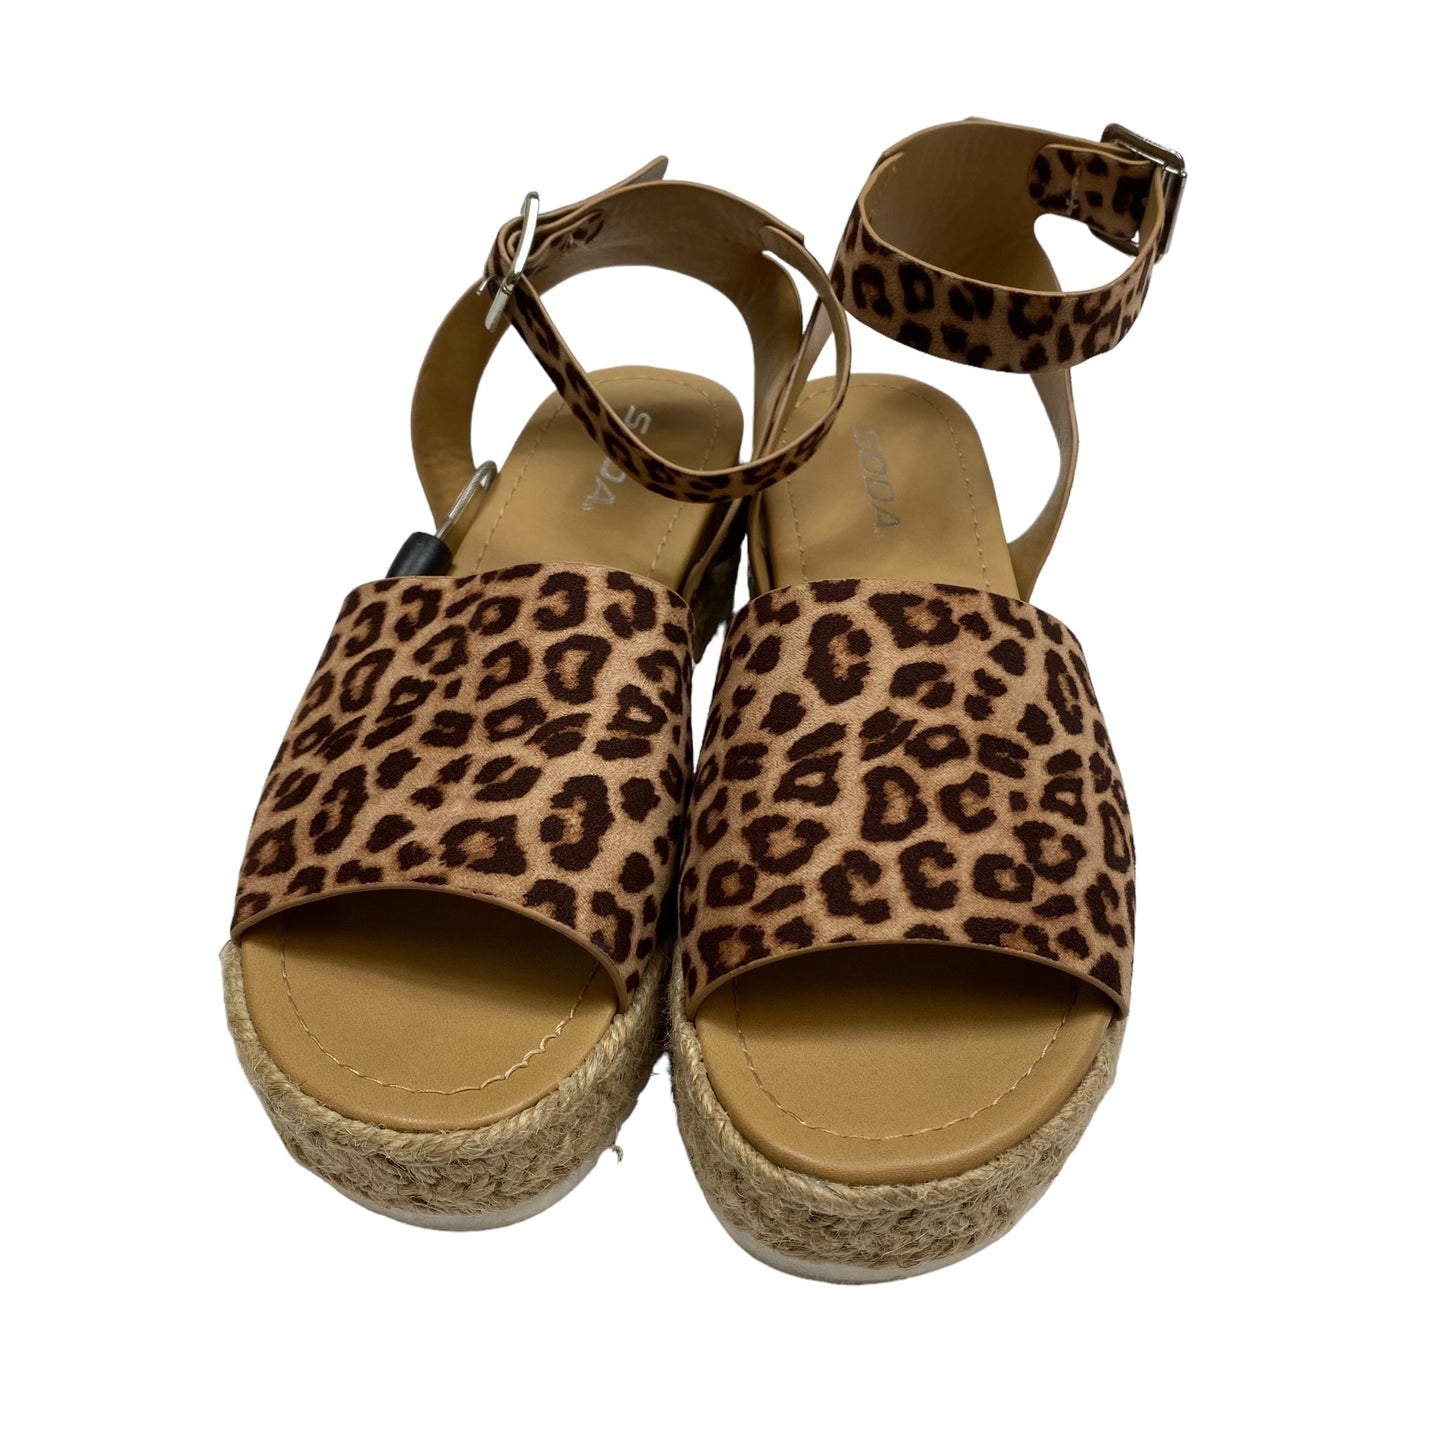 Animal Print Sandals Heels Platform Soda, Size 9